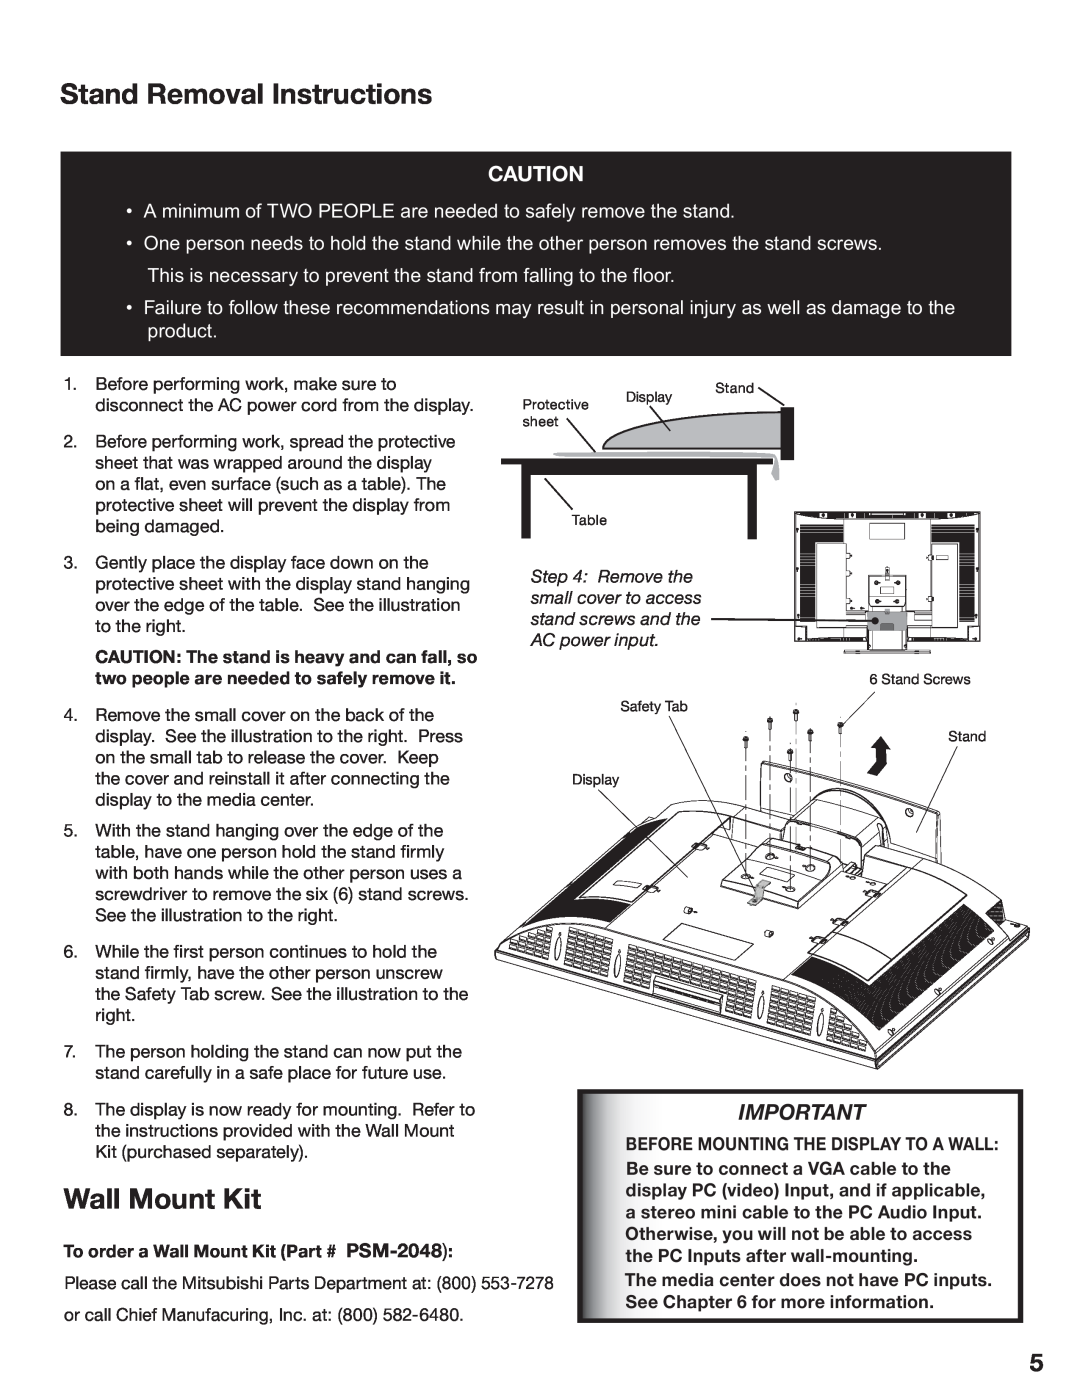 Mitsubishi Electronics LT-3780, LT-3280 manual Stand Removal Instructions, Wall Mount Kit 